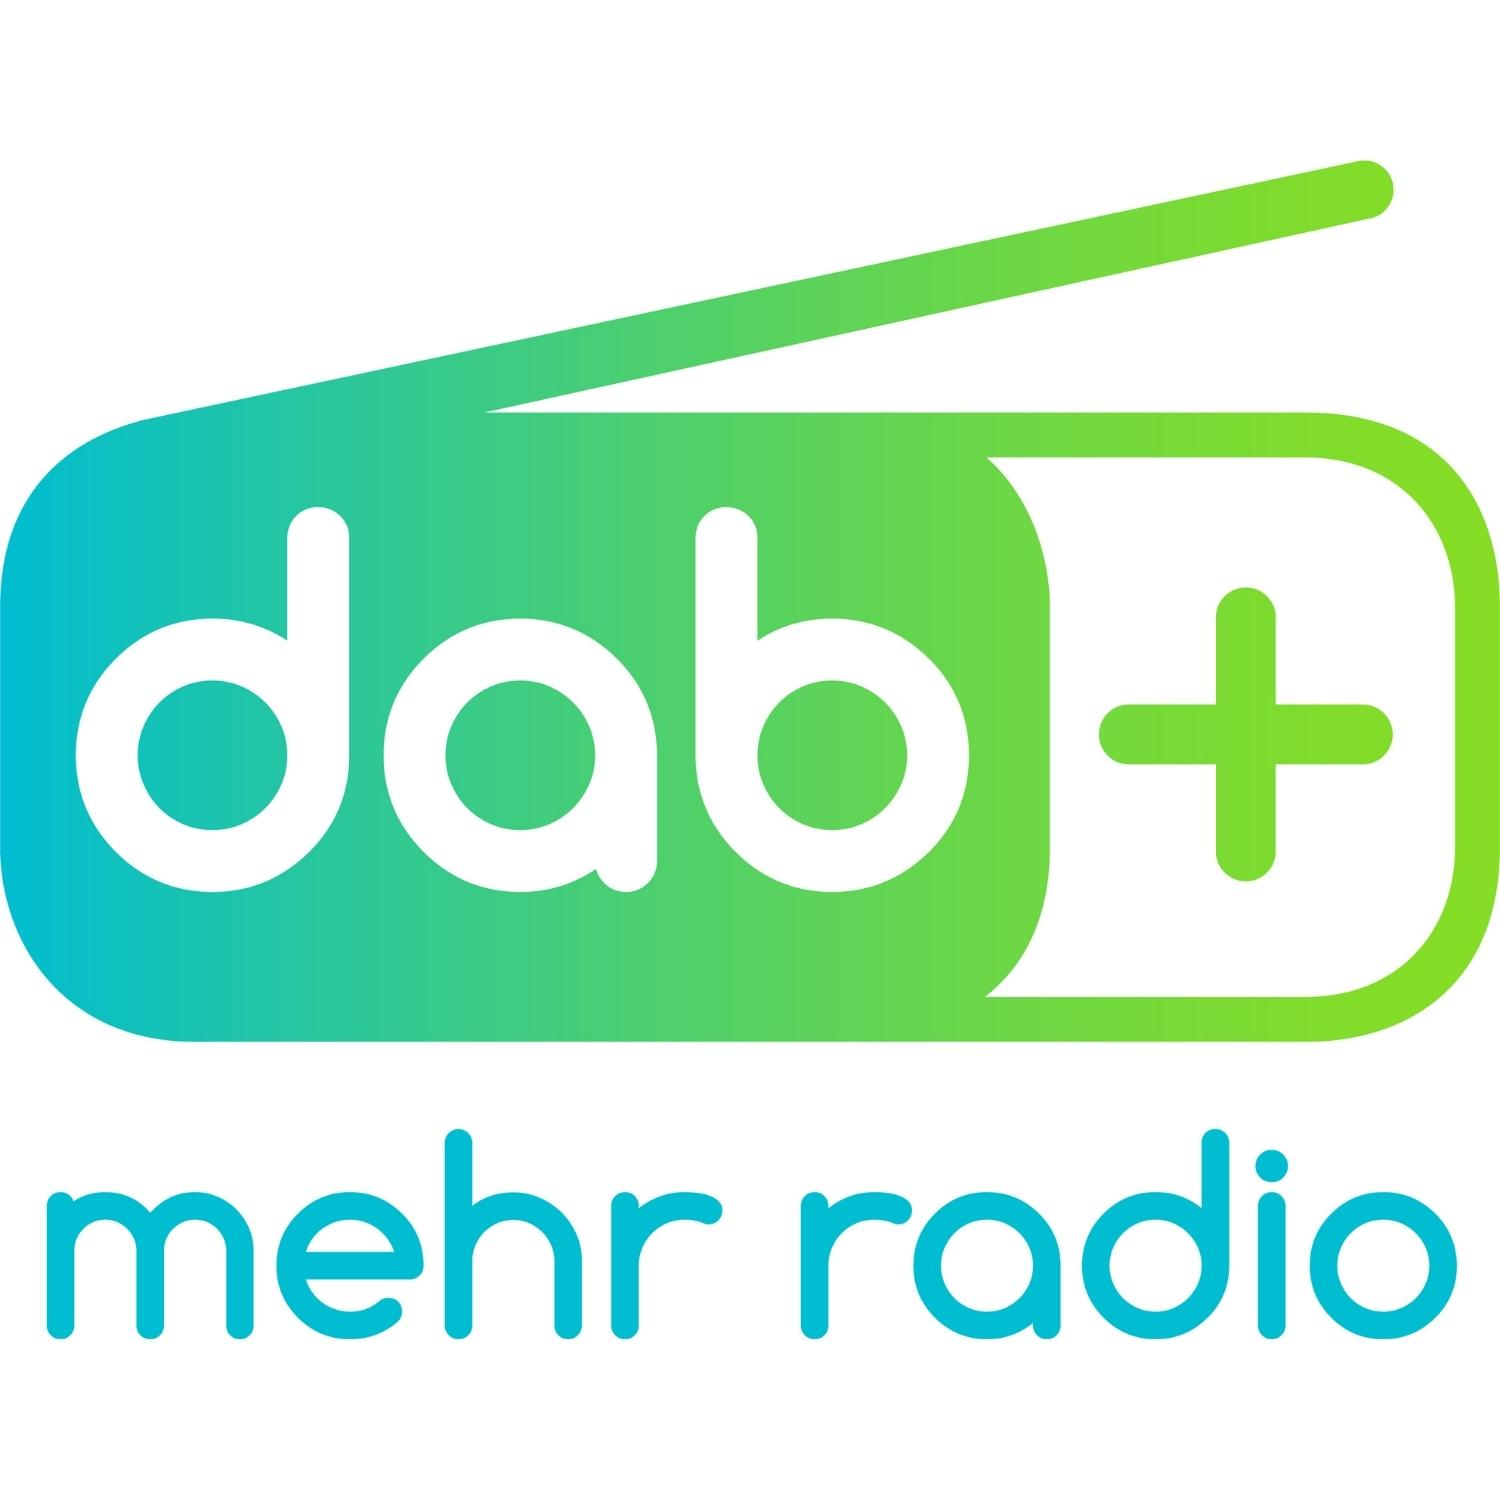 DAB-Radio, SOUNDMASTER DAB280SW FM, DAB+, Schwarz AM,